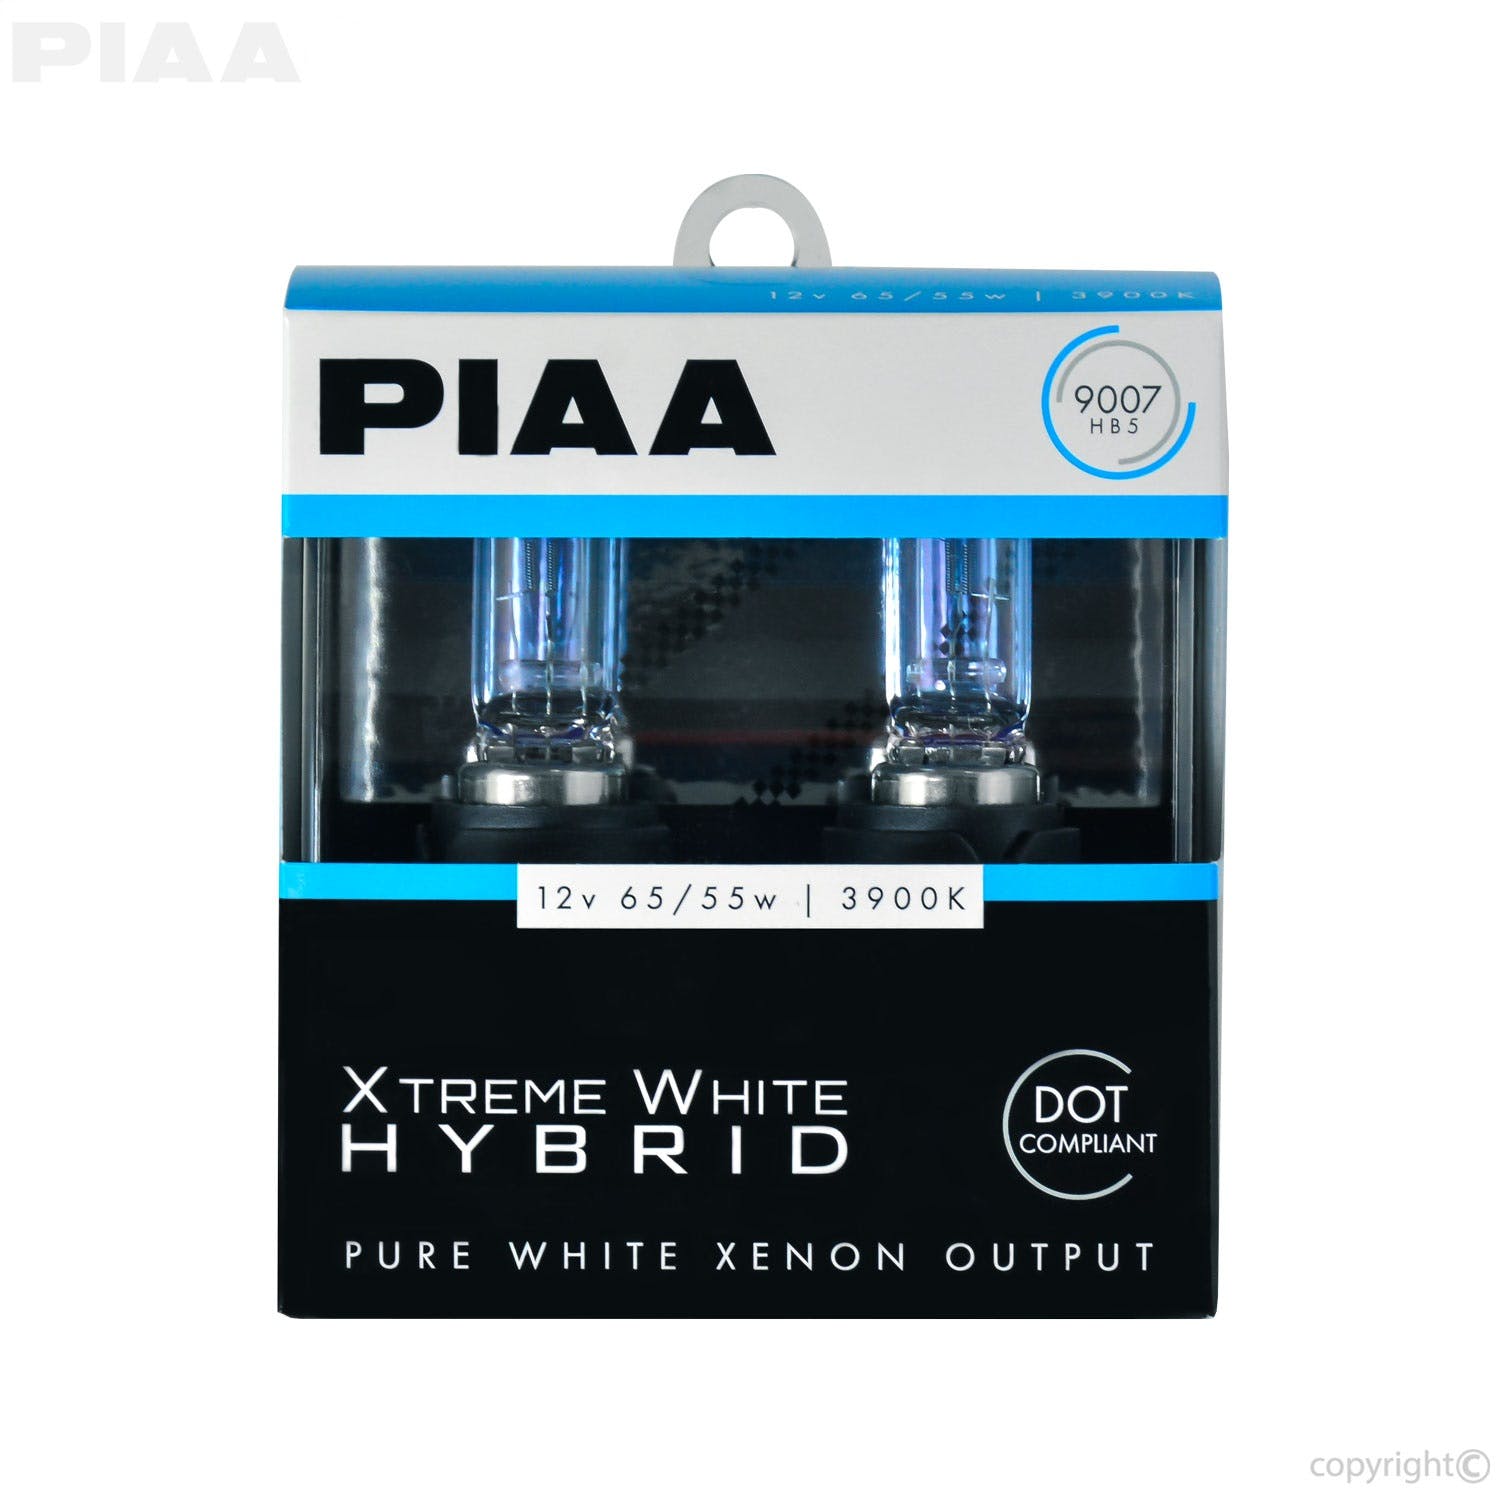 PIAA 23-10197 9007 (HB5) Xtreme White Hybrid Twin Pack - 3900K - 12V 65/55W